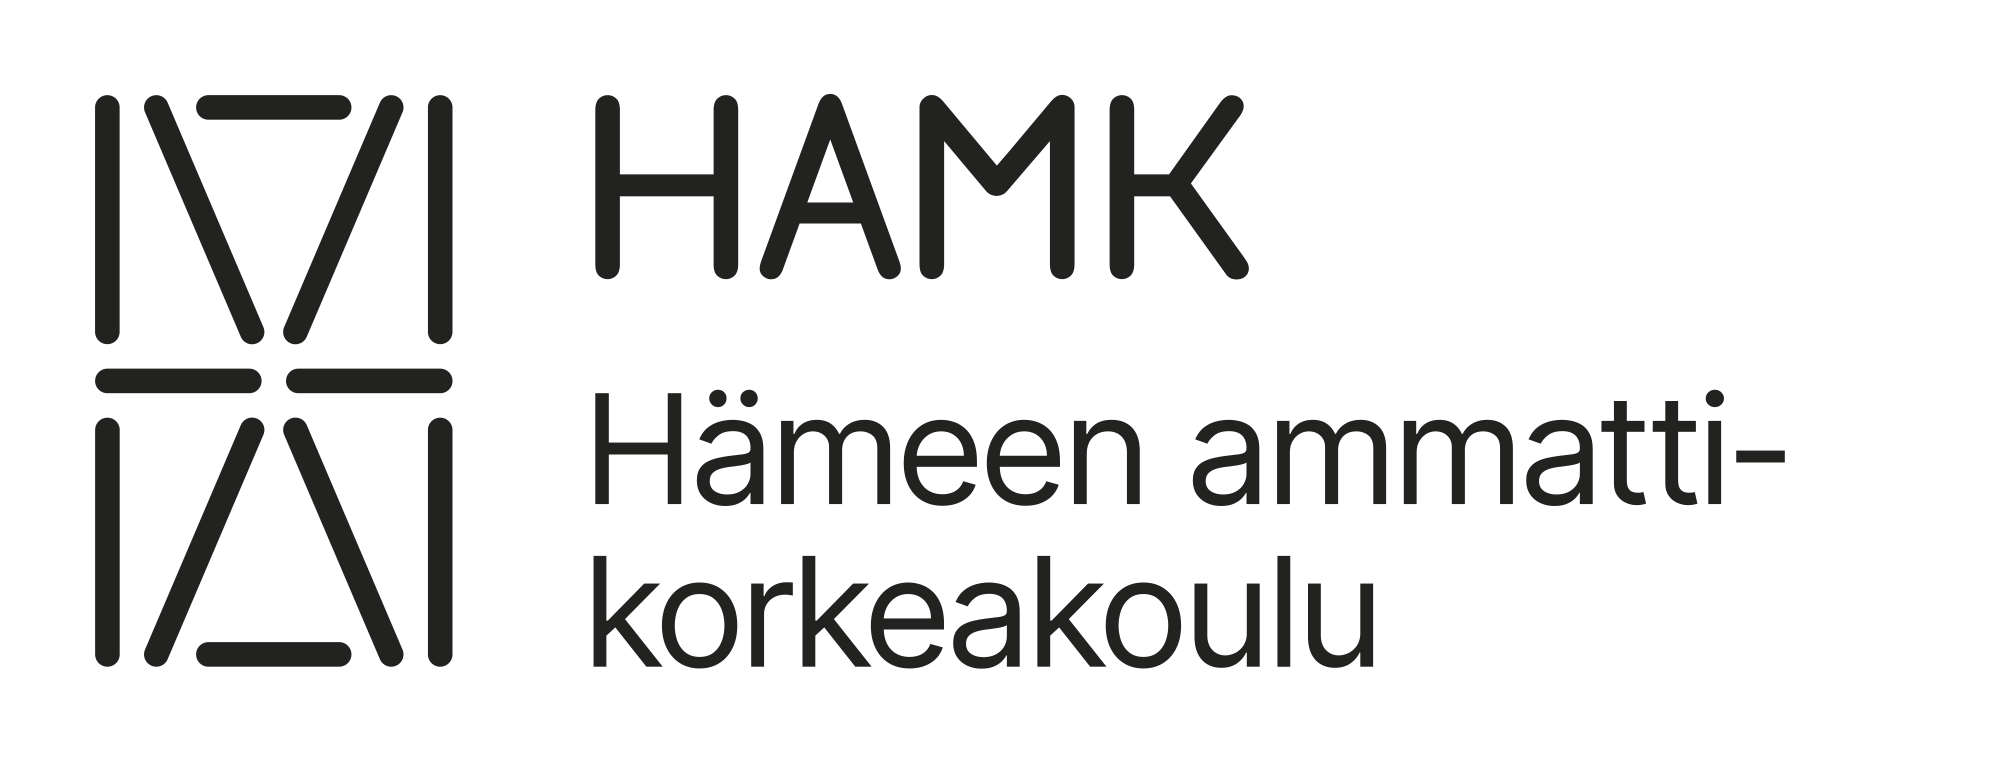 hamk_logo_text_large_fin.png